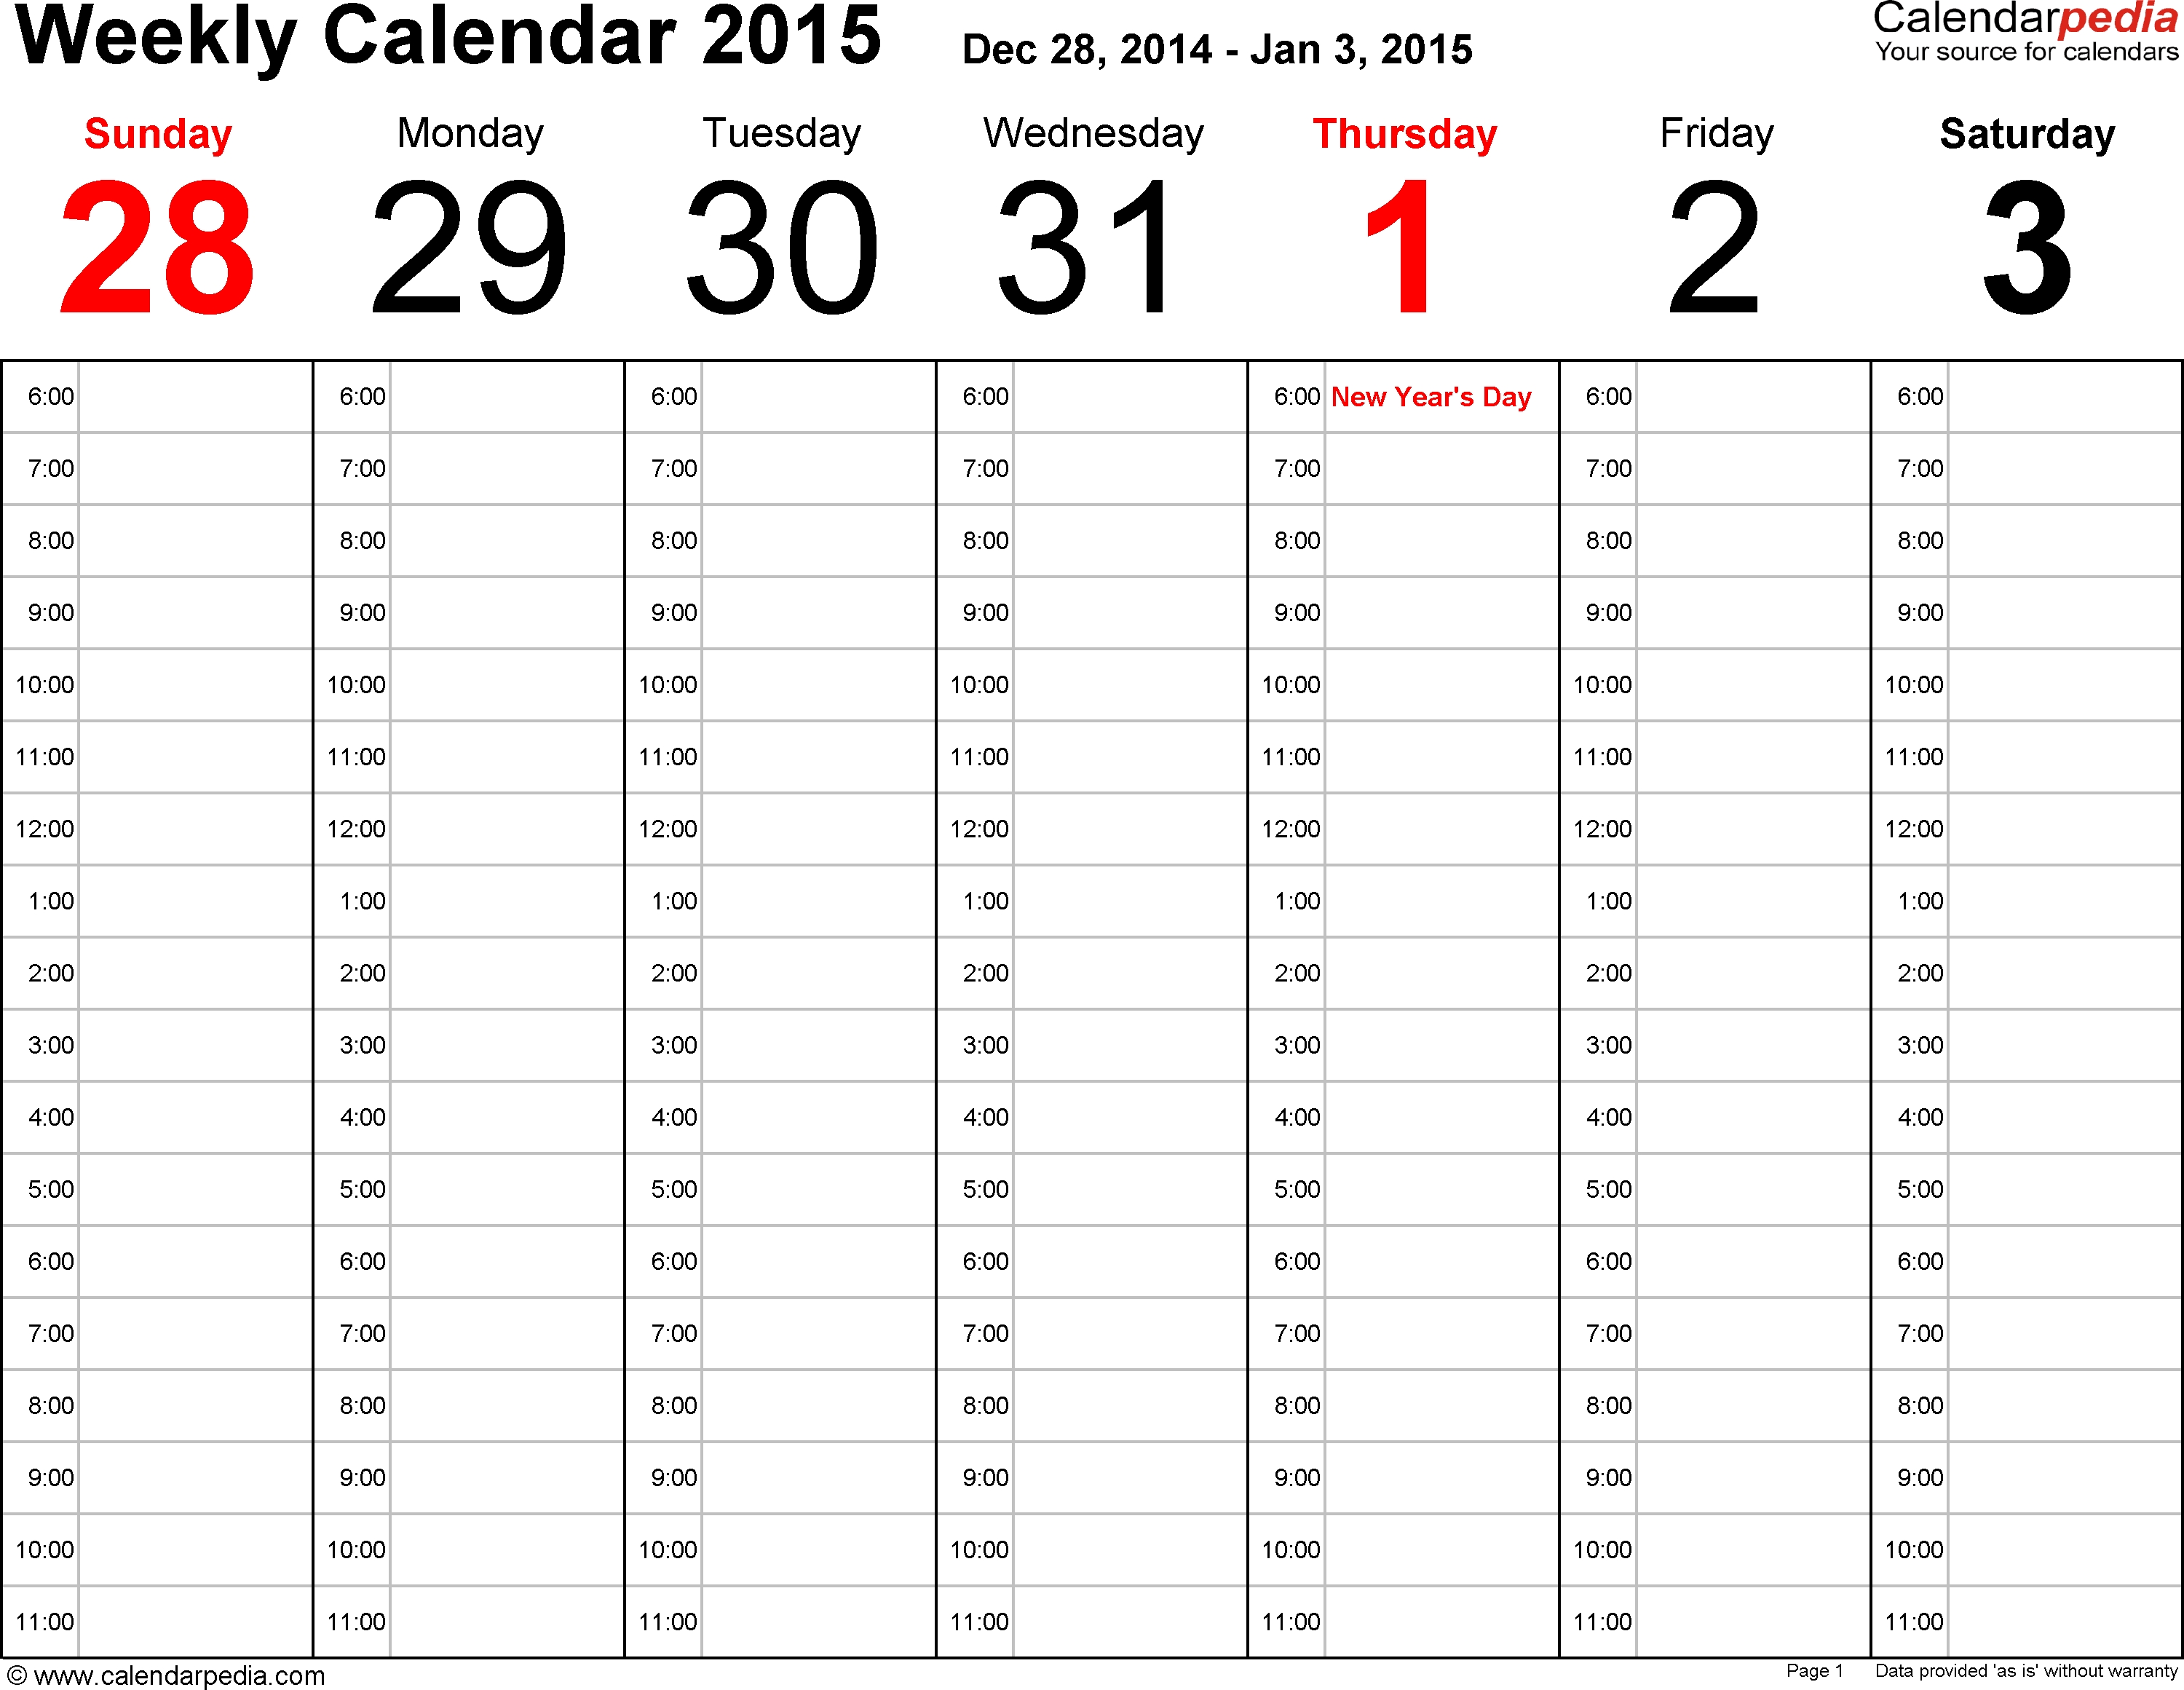 Weekly Calendar 2015 For Word - 12 Free Printable Templates for Printable Weekly Calendar With Top 5 For Week